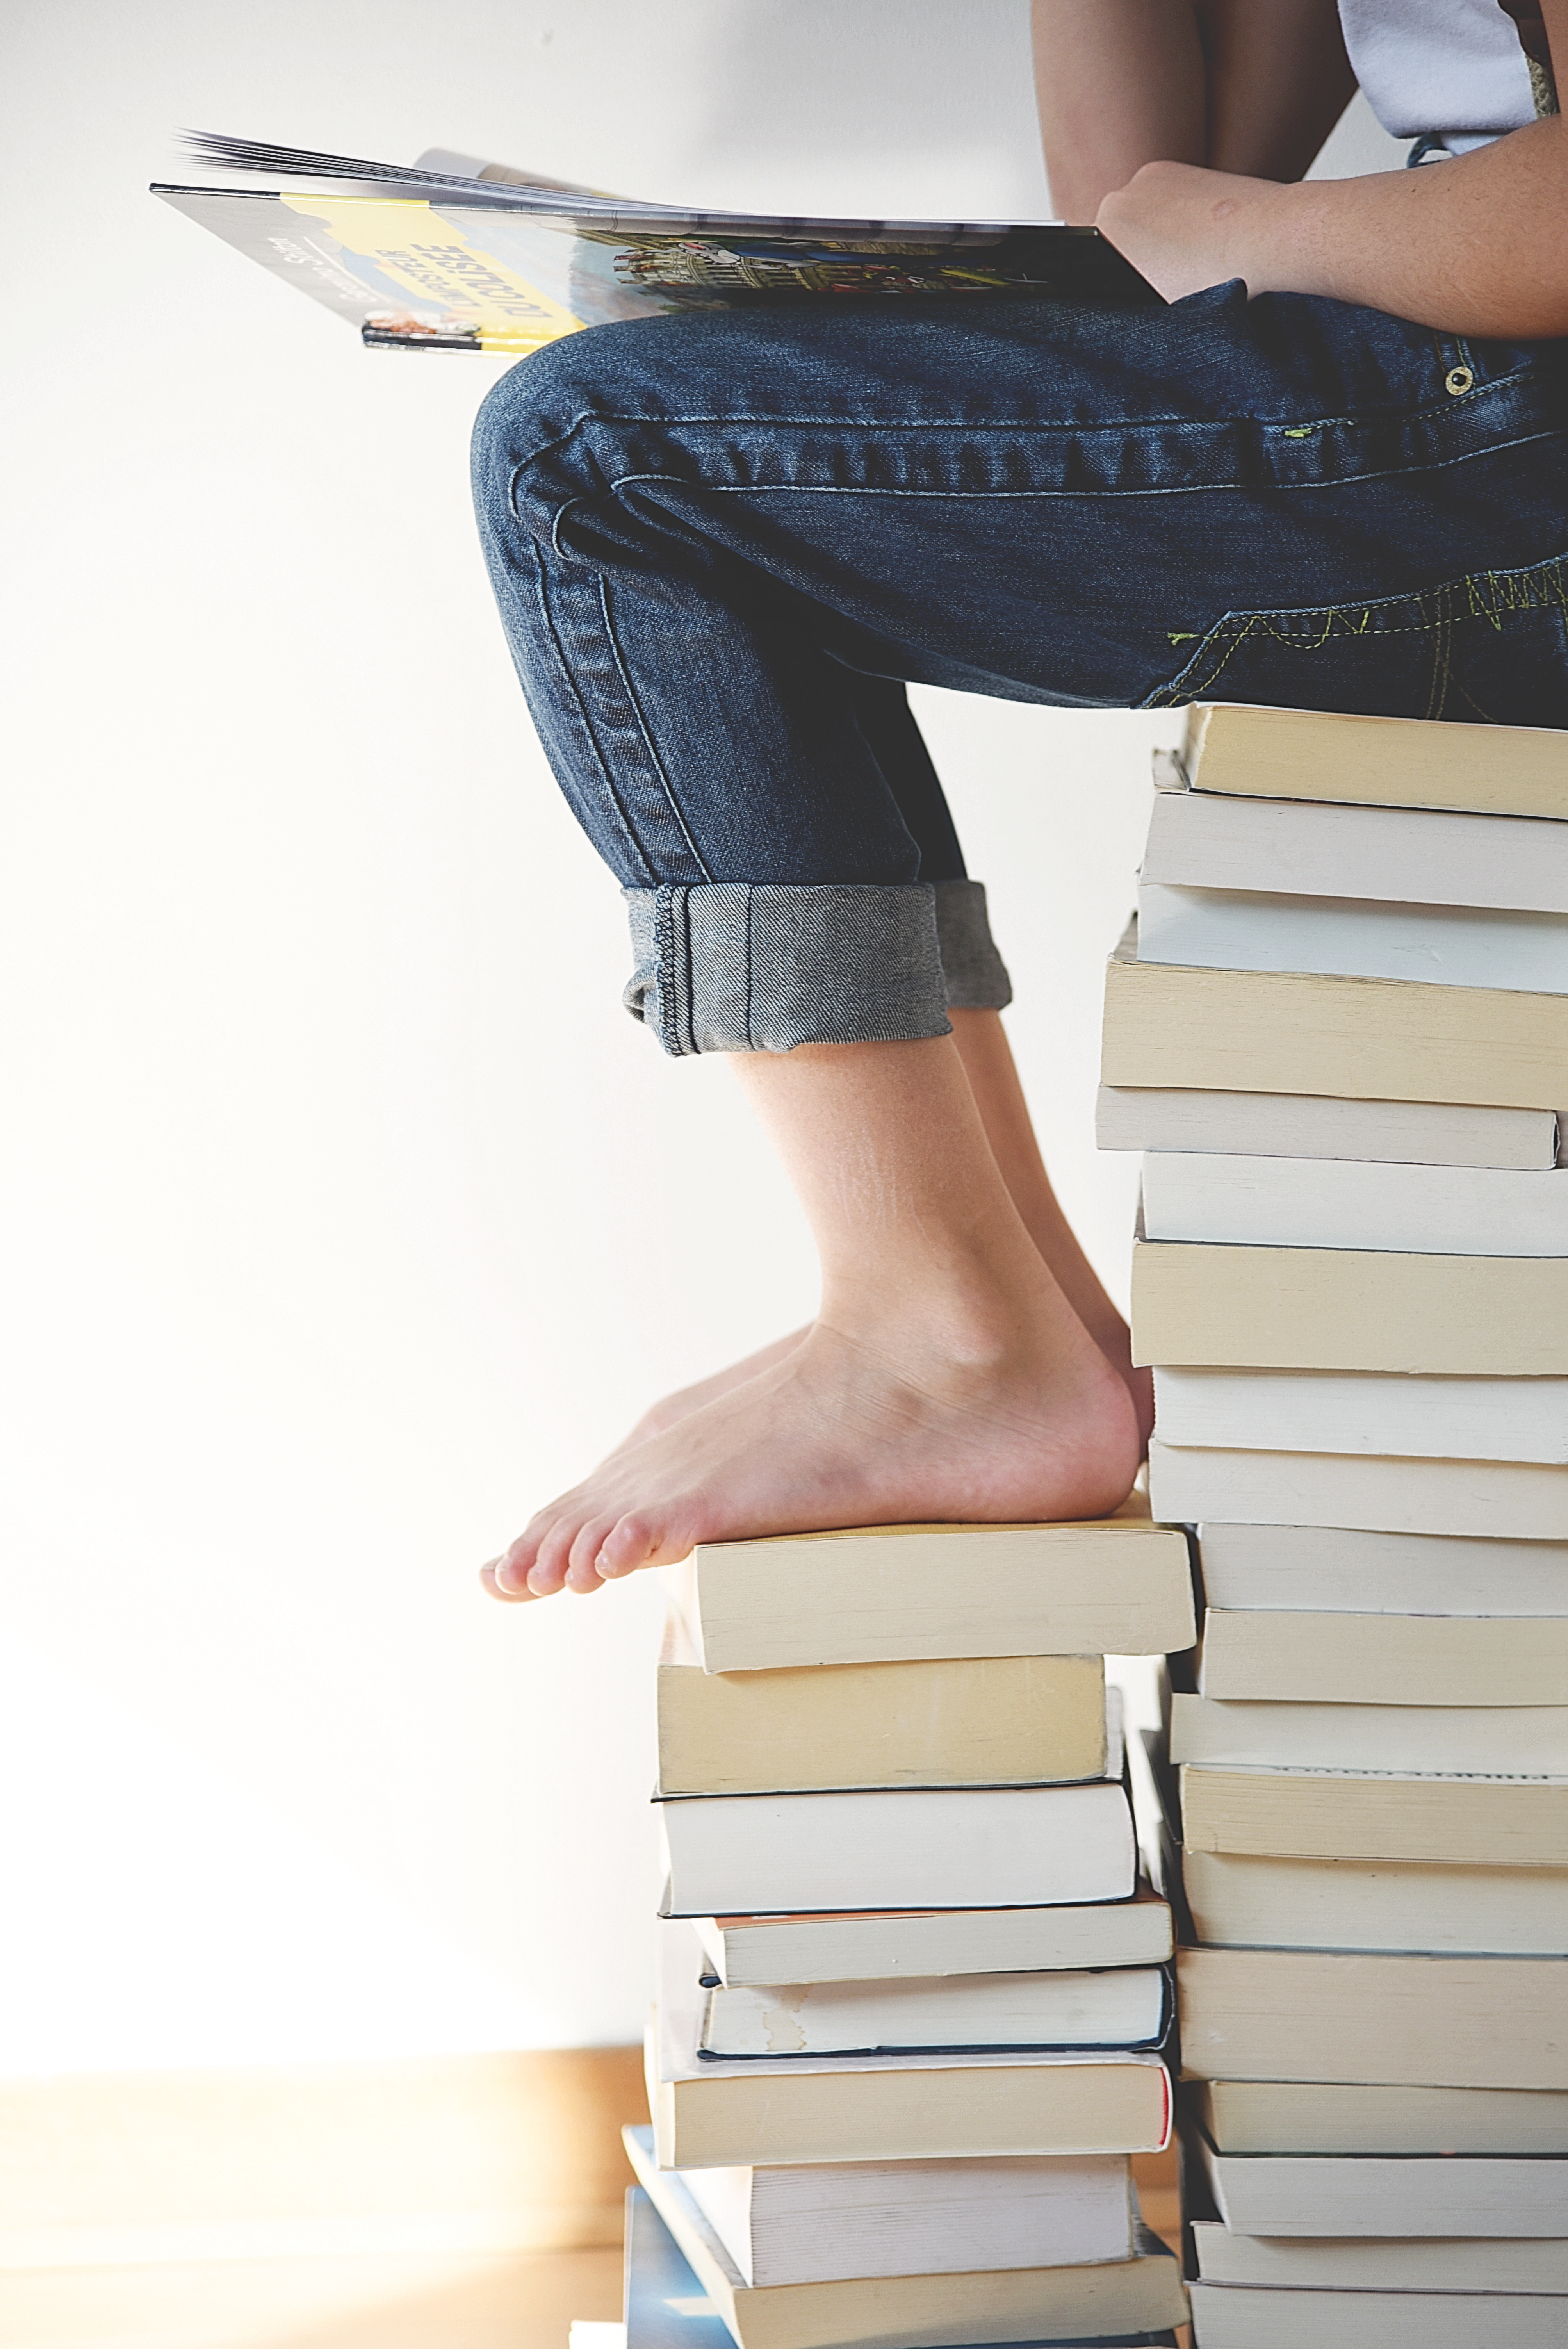 feet on book pile